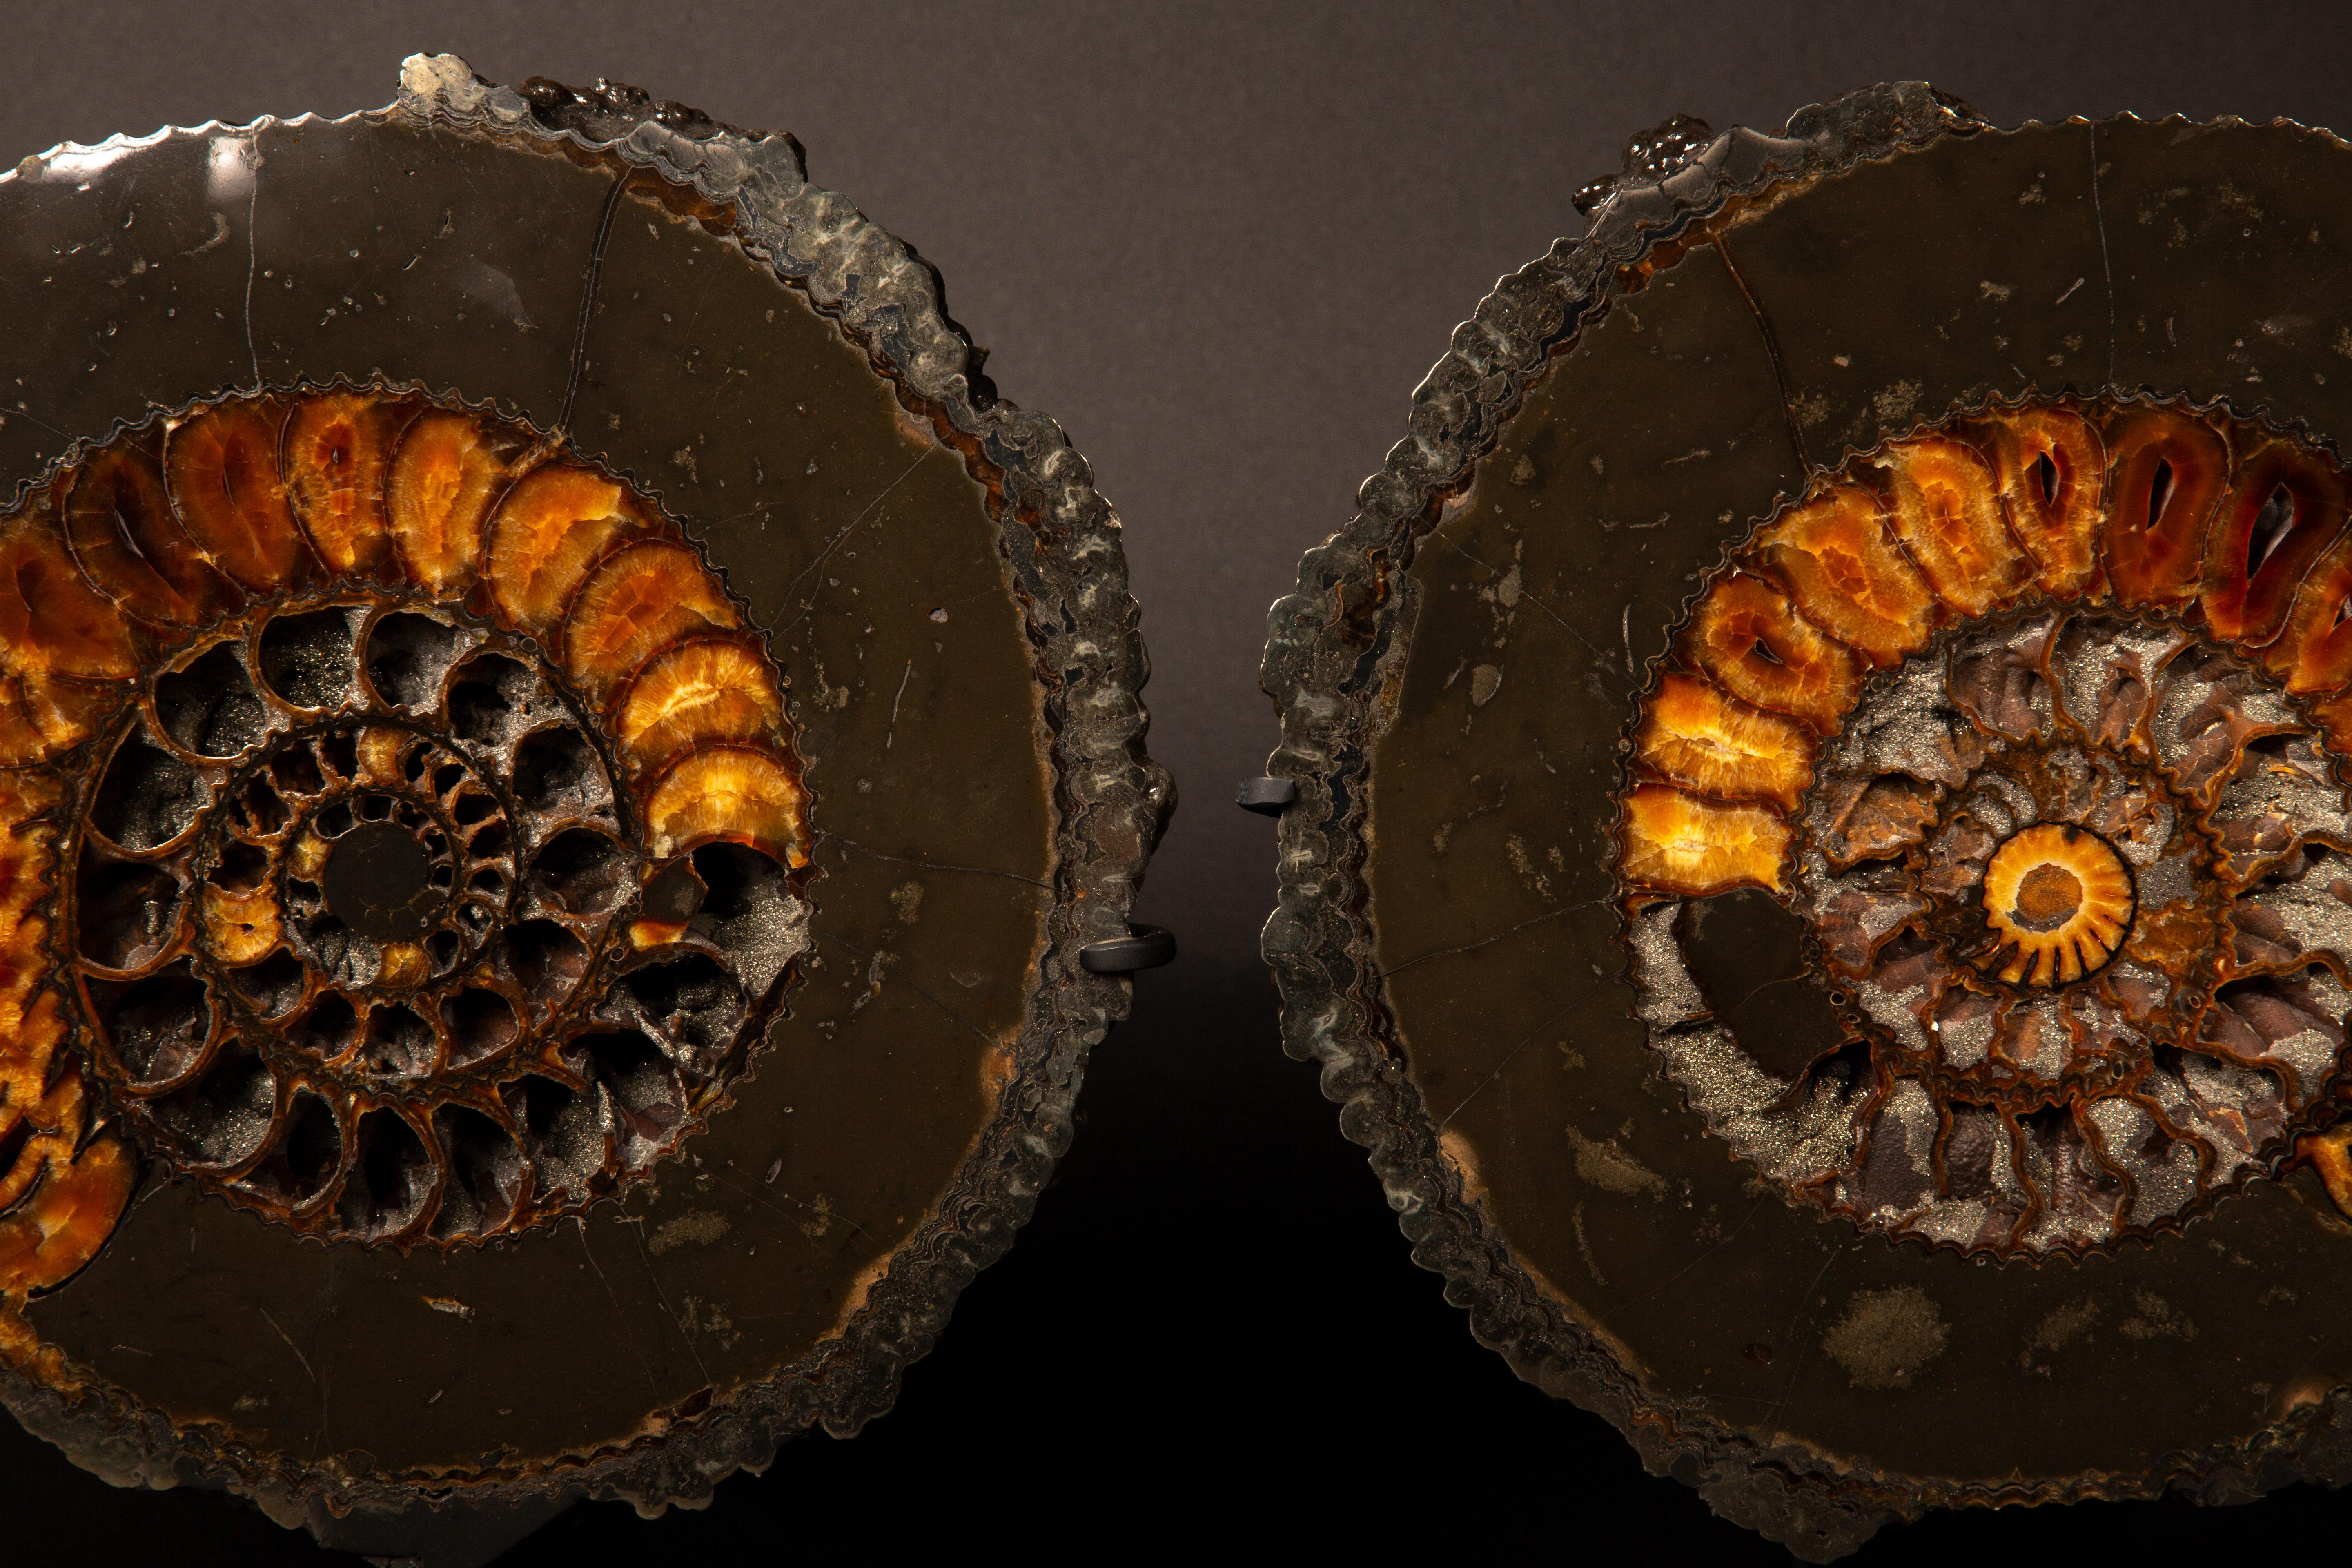 European Exquisite Pyritized Ammonite Pair (Speetoniceras sp.) - Custom Mounted Display For Sale